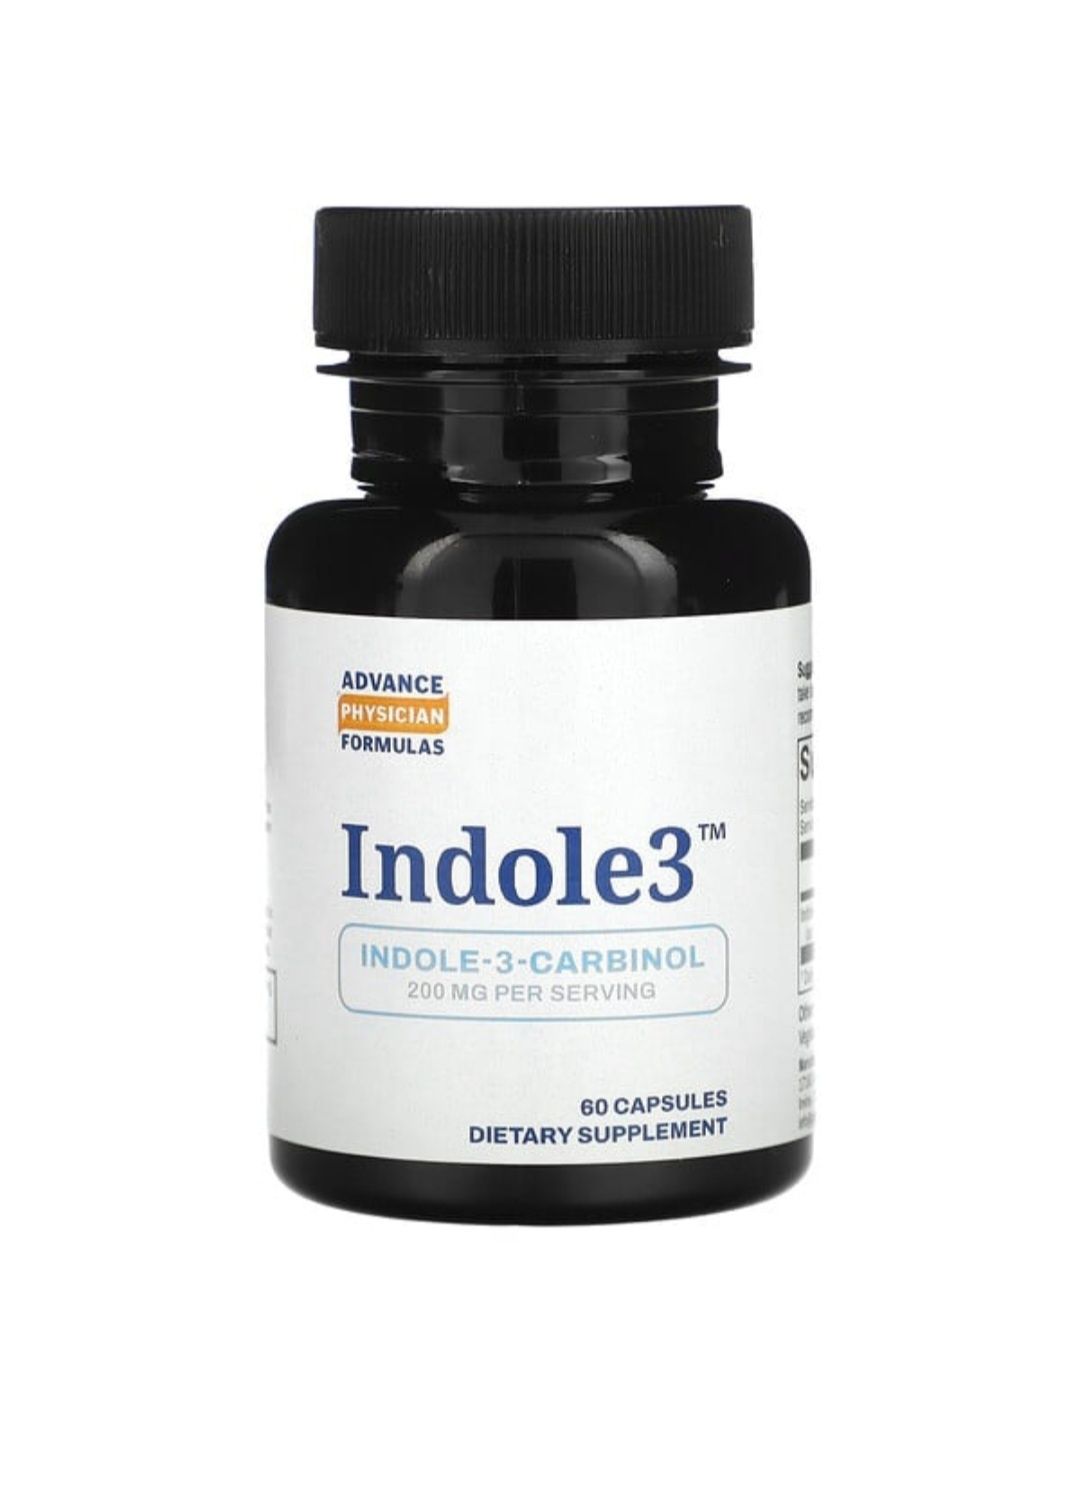 Индол-3, indole,menopause.